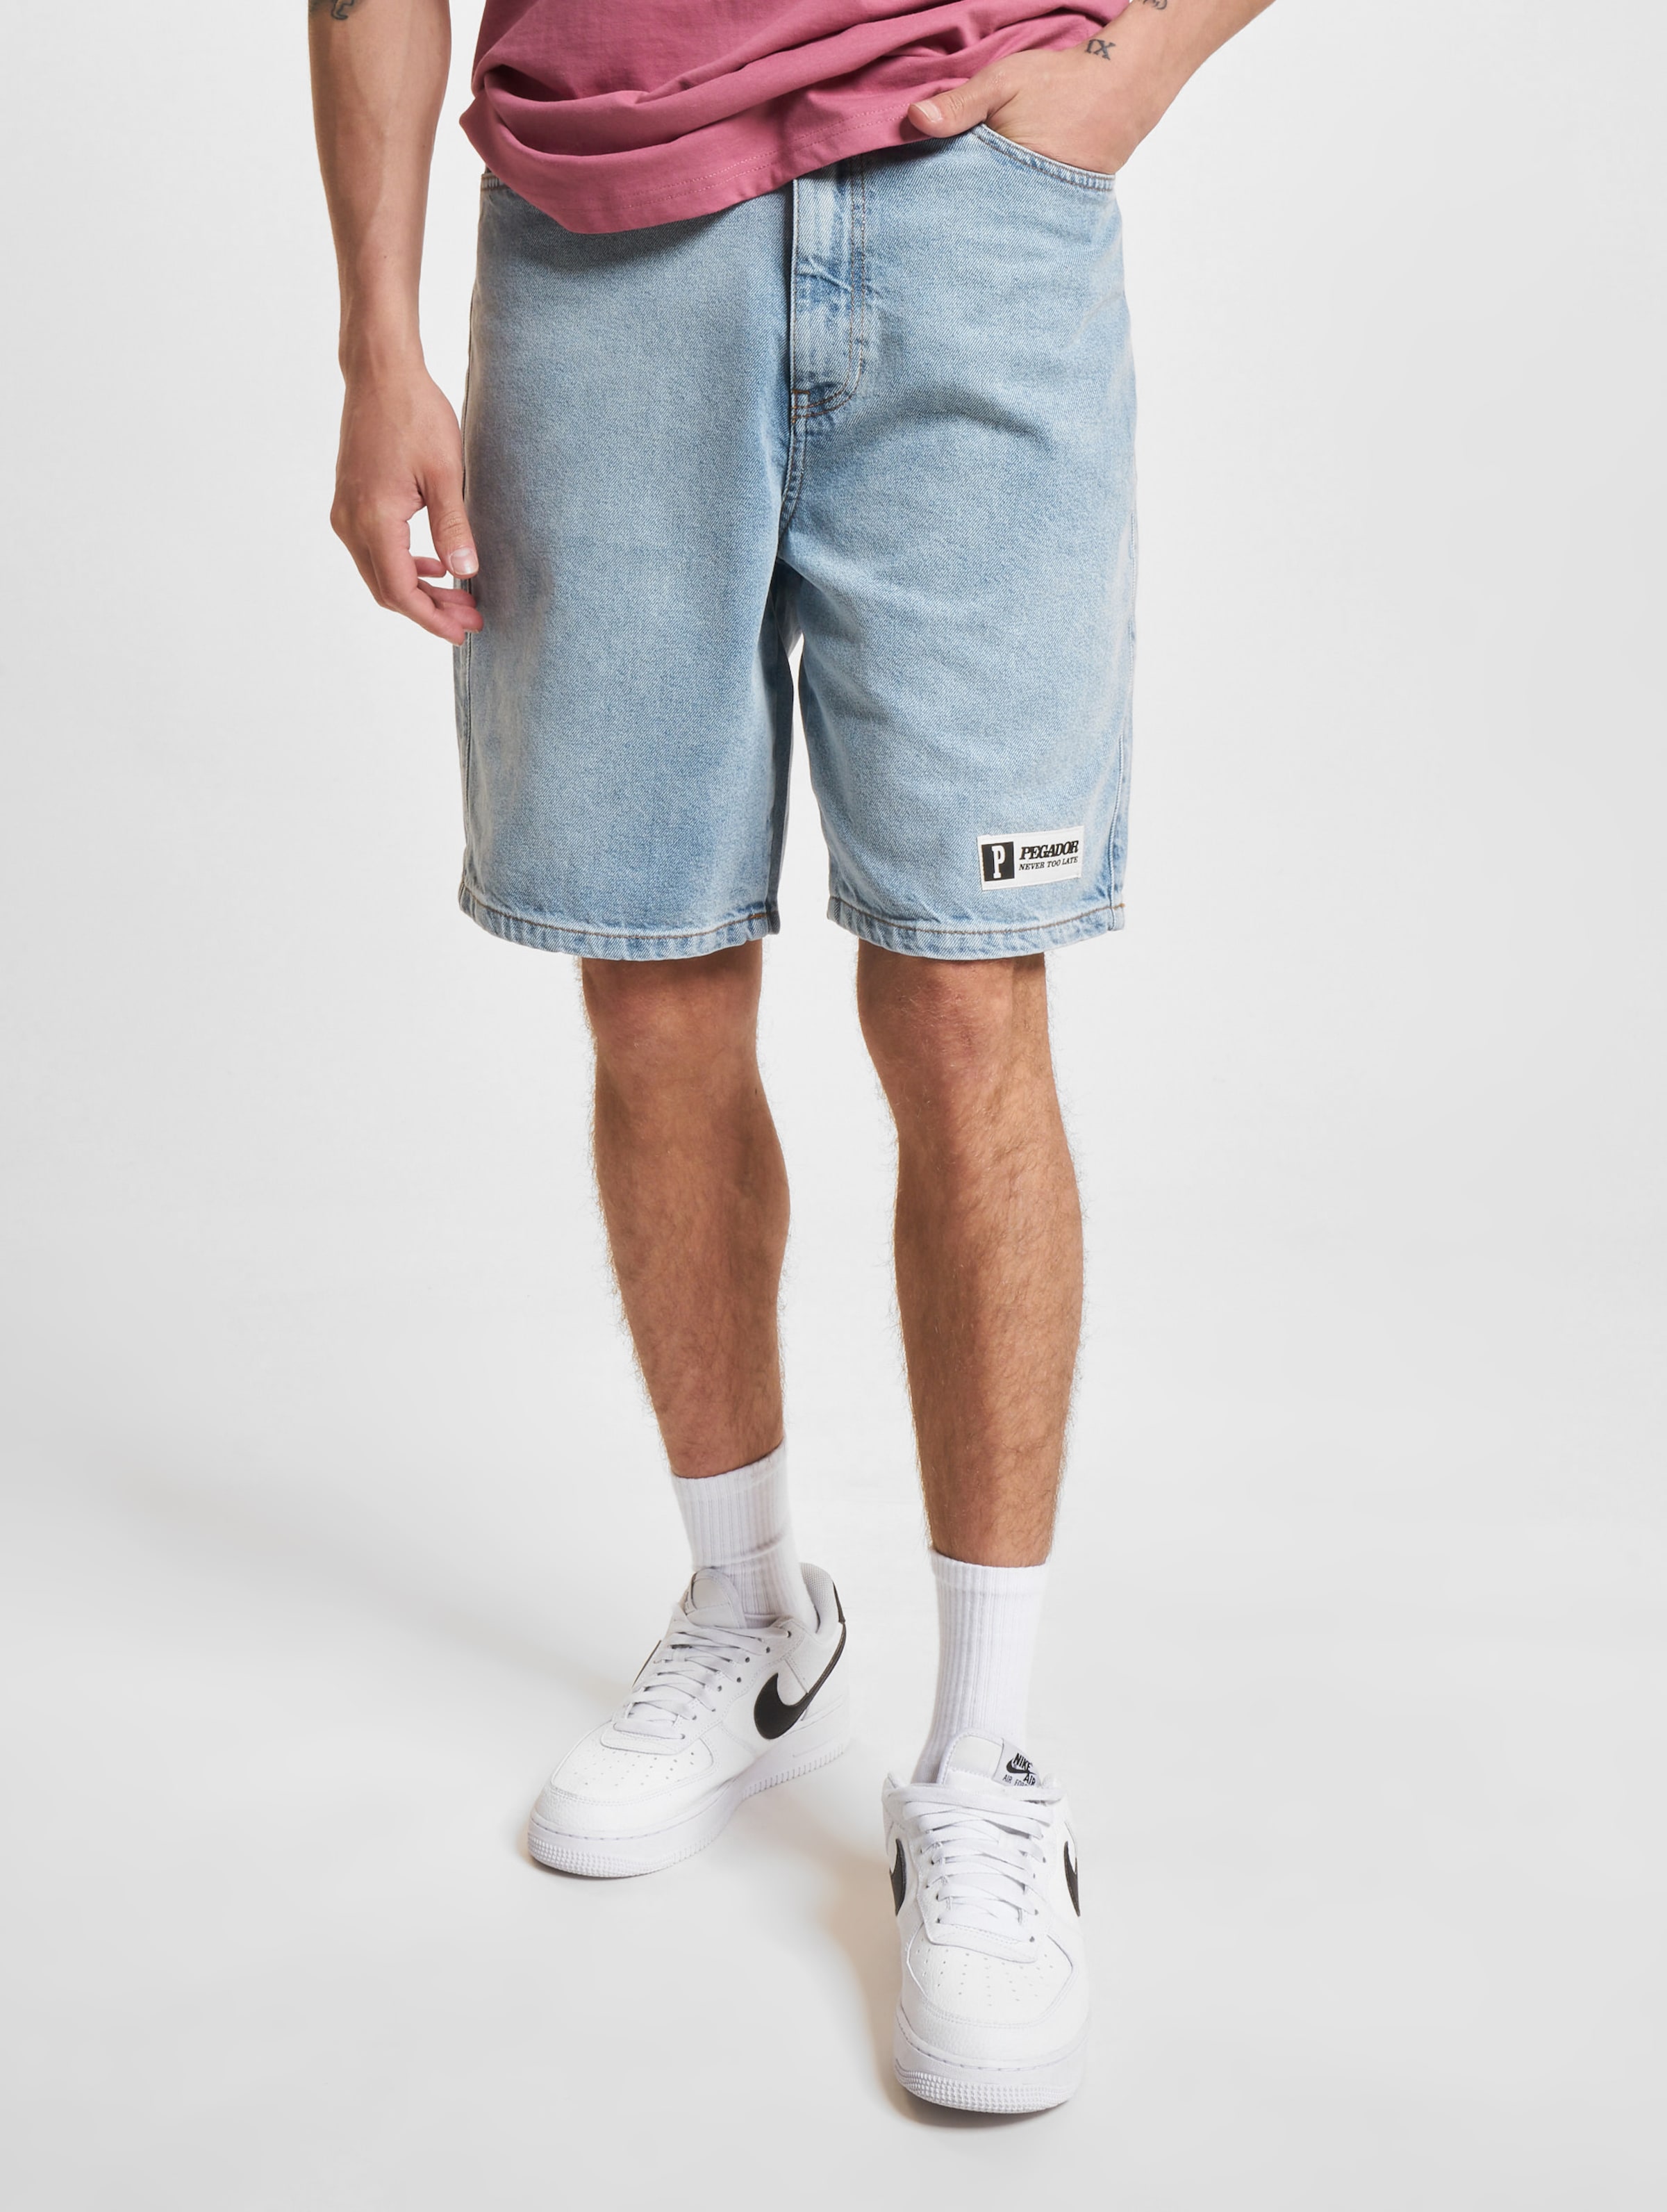 PEGADOR Moores Jeans Shorts Männer,Unisex op kleur blauw, Maat 29